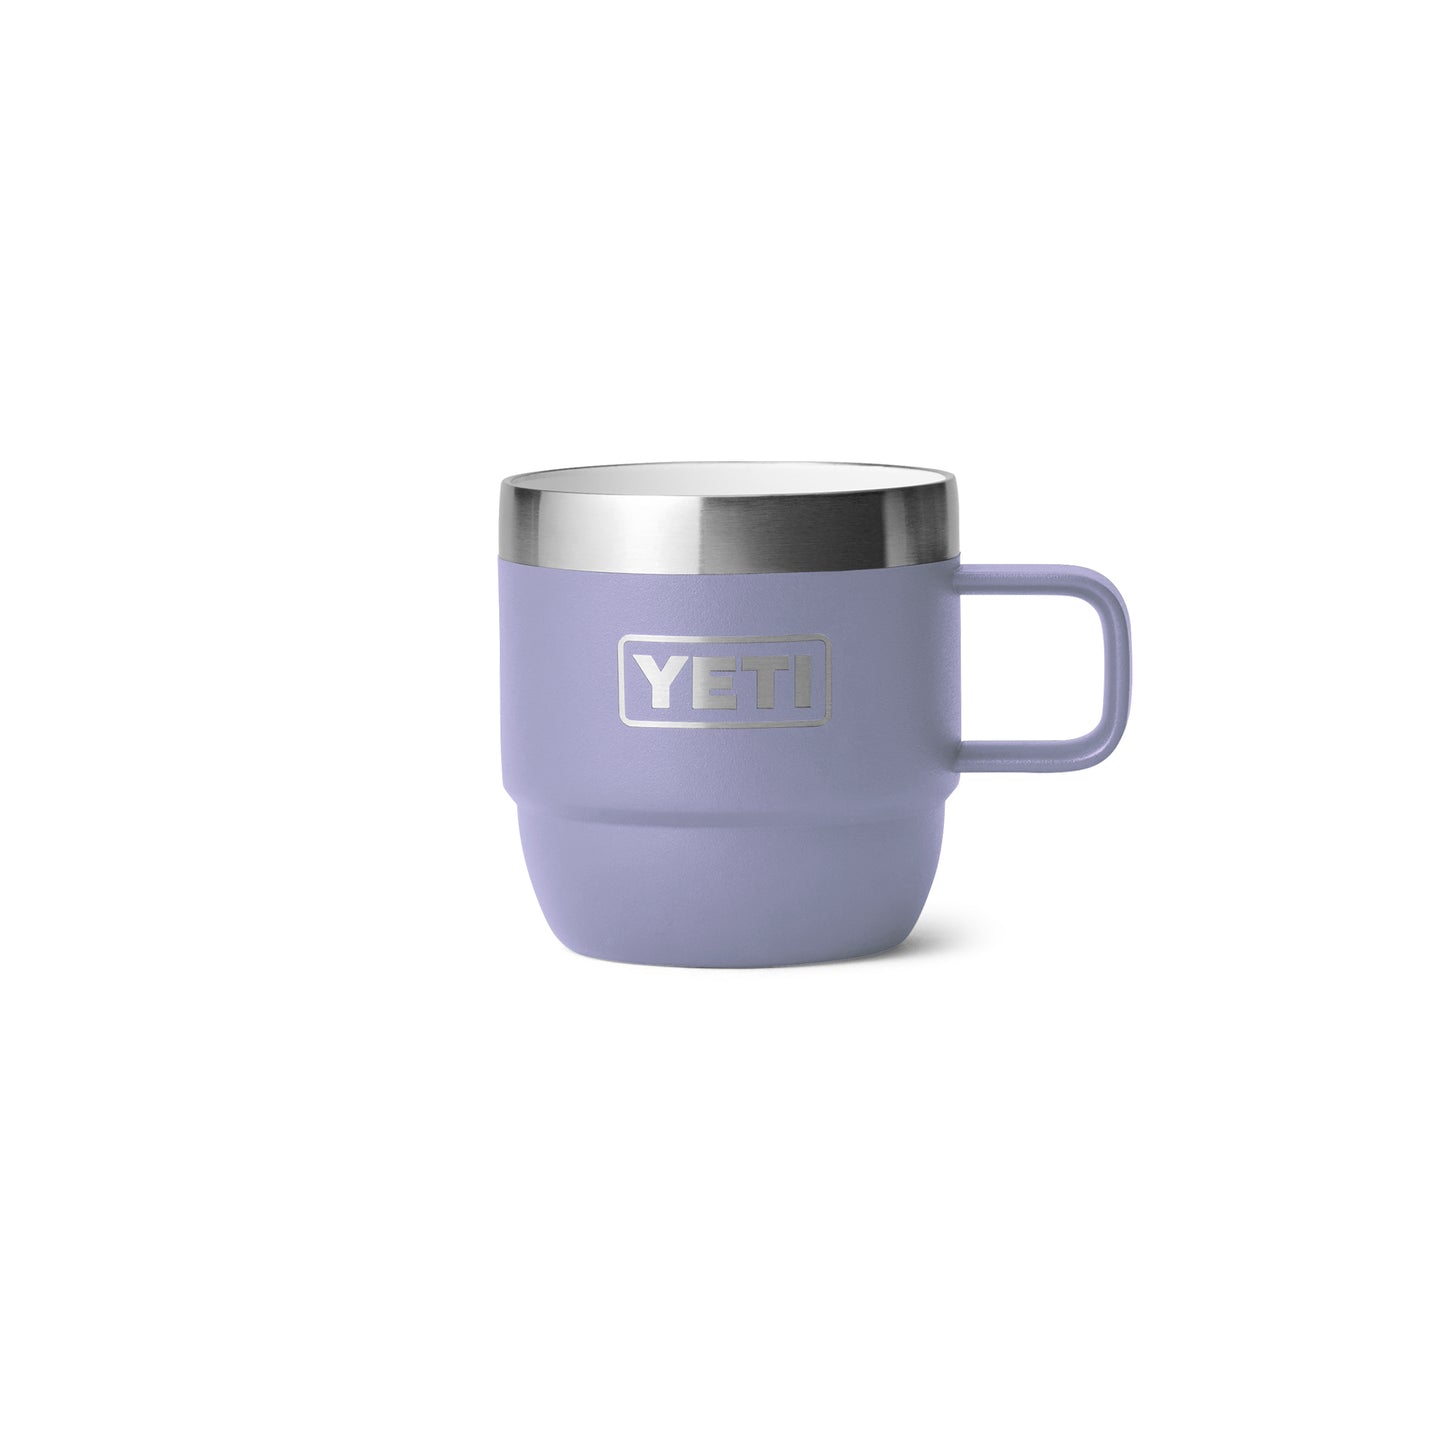 YETI Rambler Stackable Mug - 6oz (177ml) - Cosmic Lilac